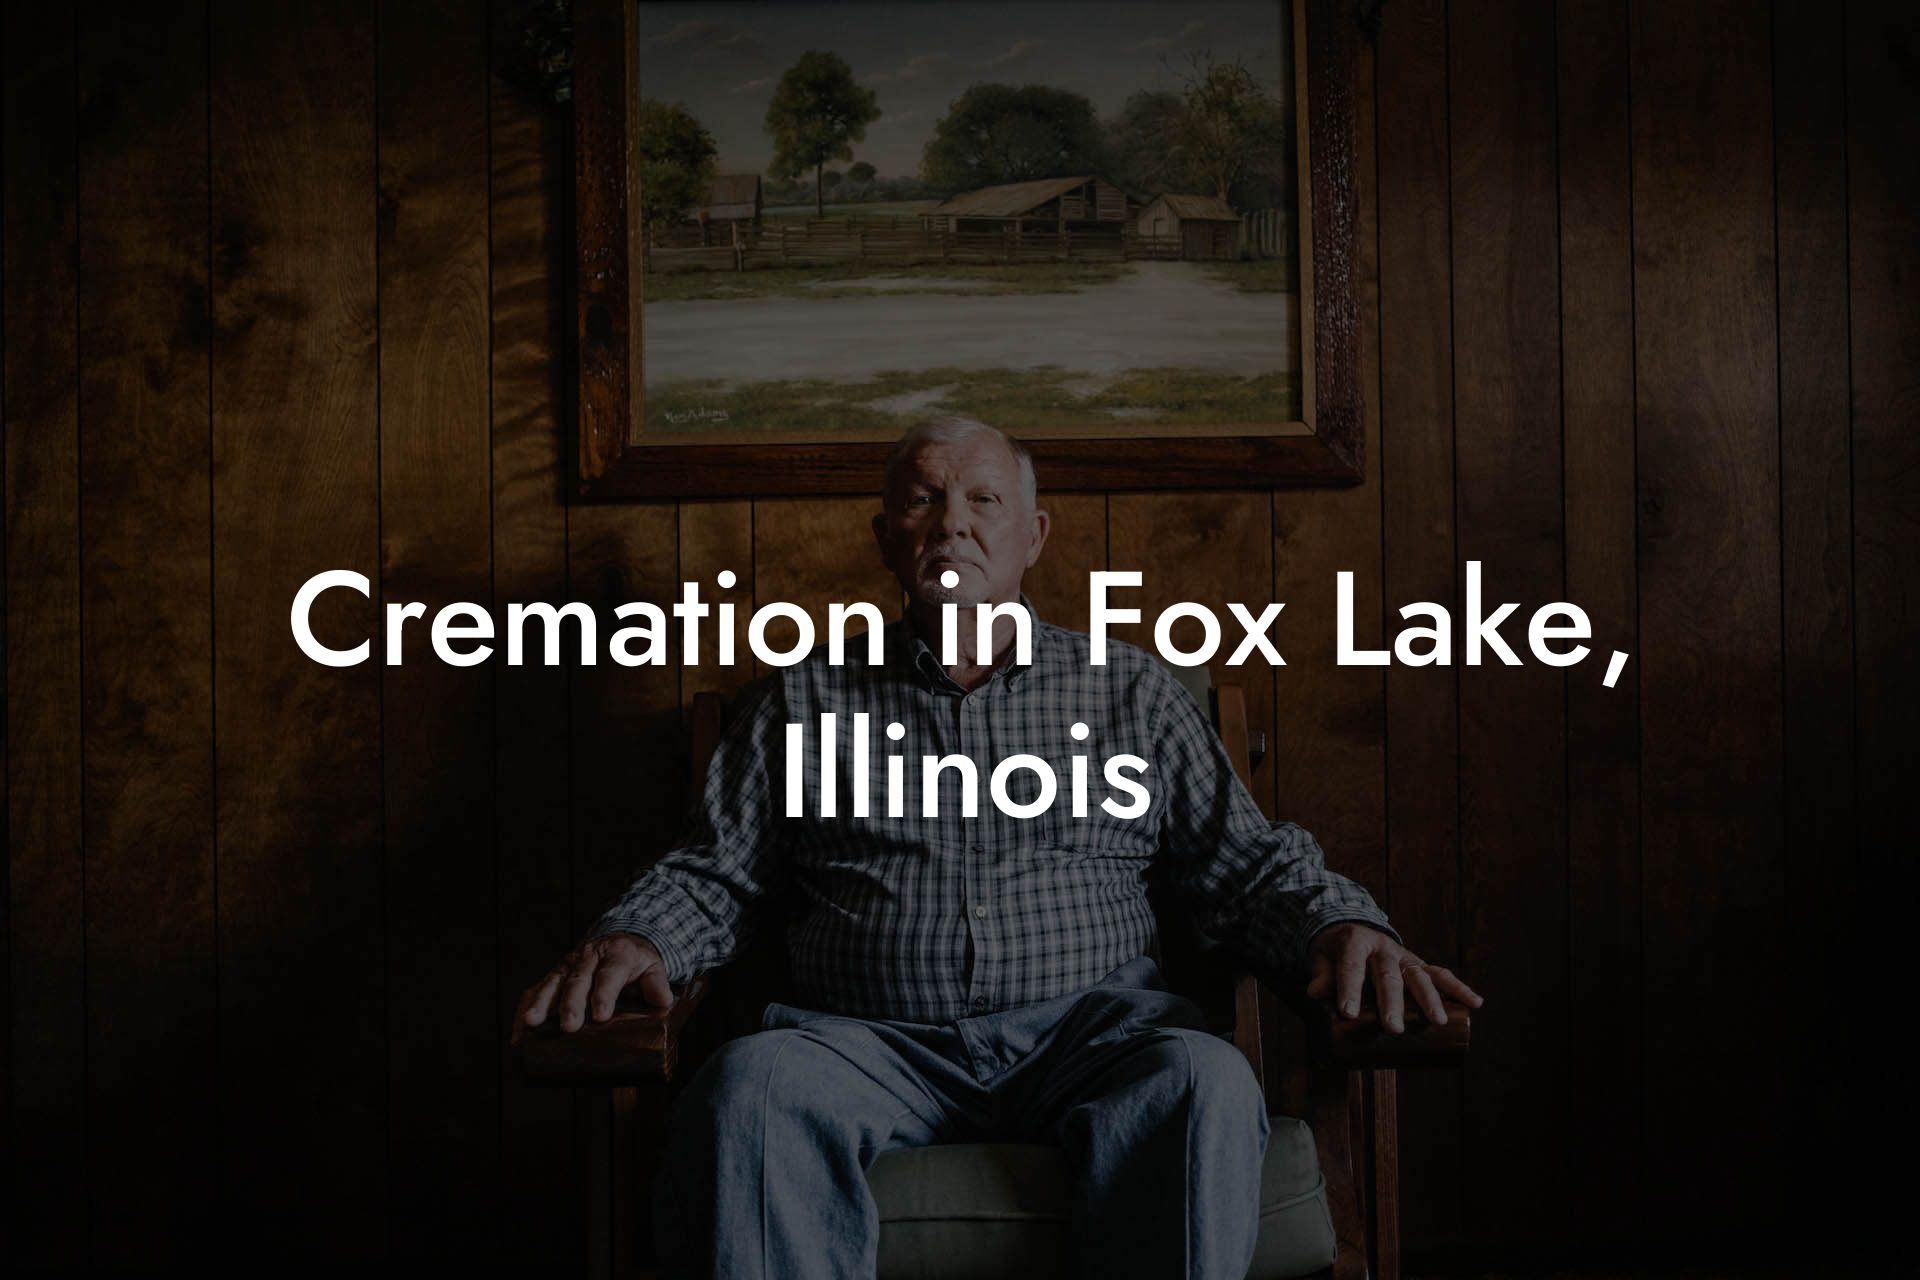 Cremation in Fox Lake, Illinois